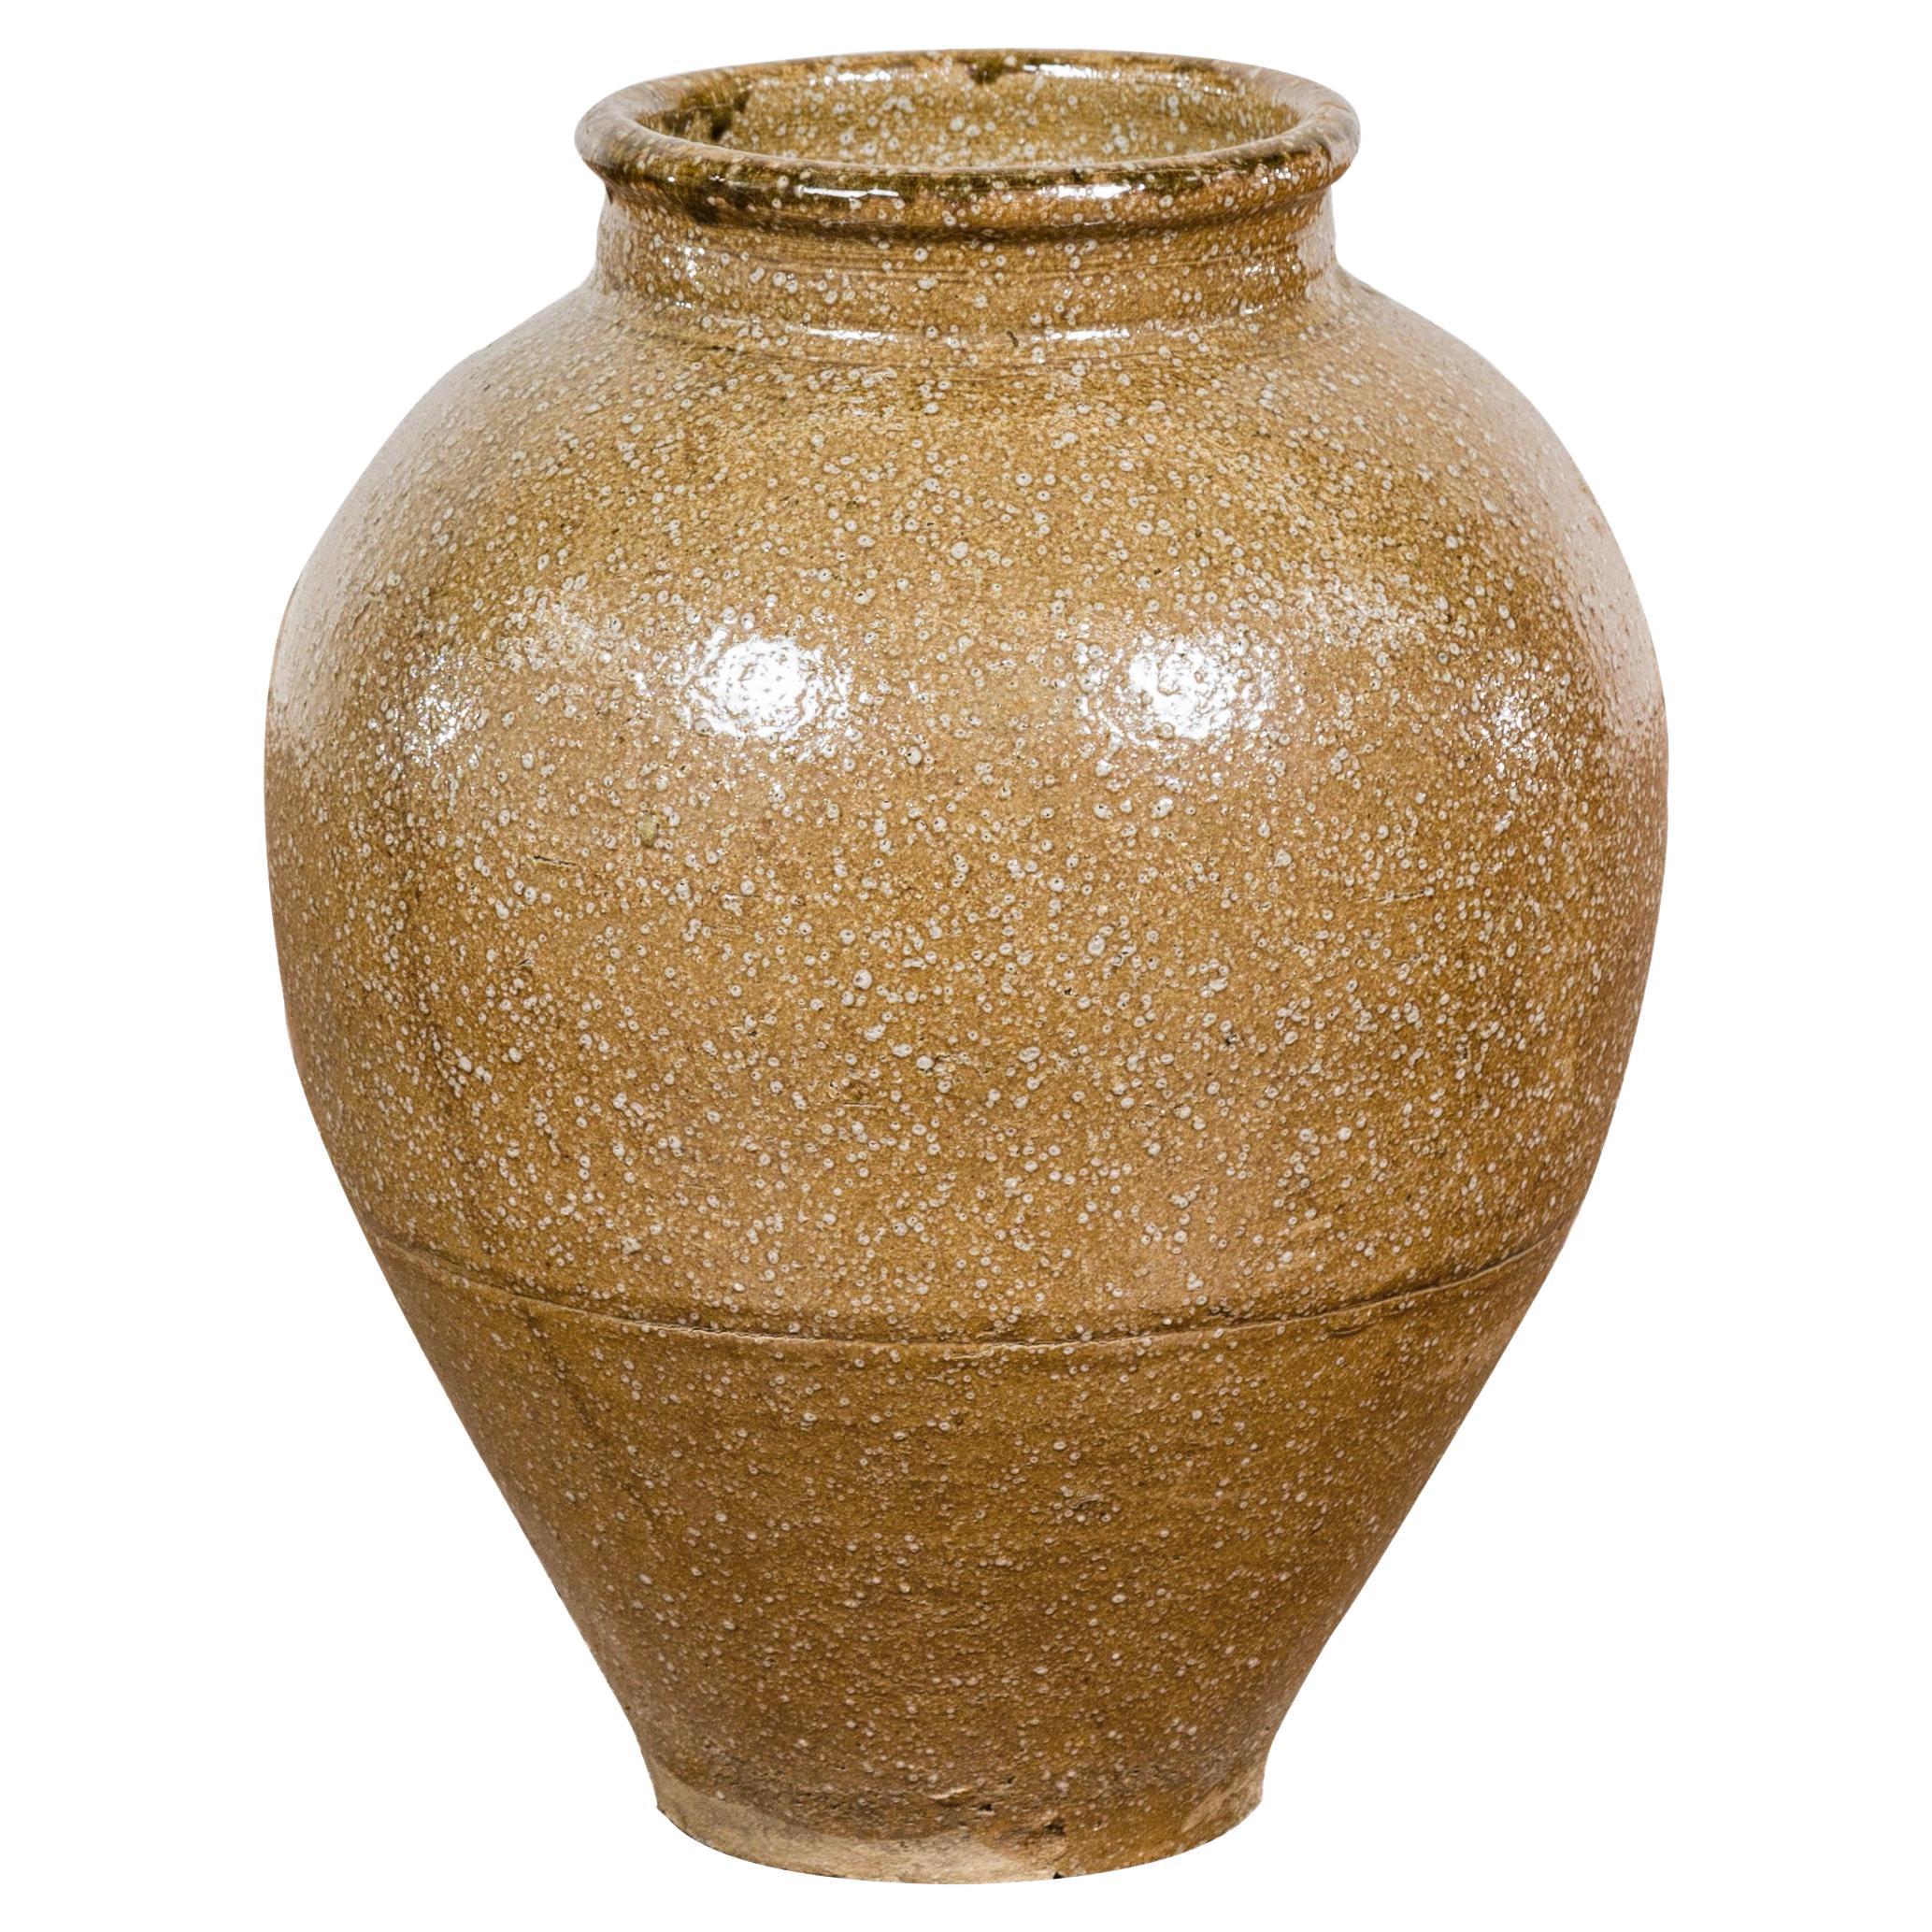 Japanese Taishō Period Two-Tone Sand Glaze Vase with Textured Finish, circa 1900